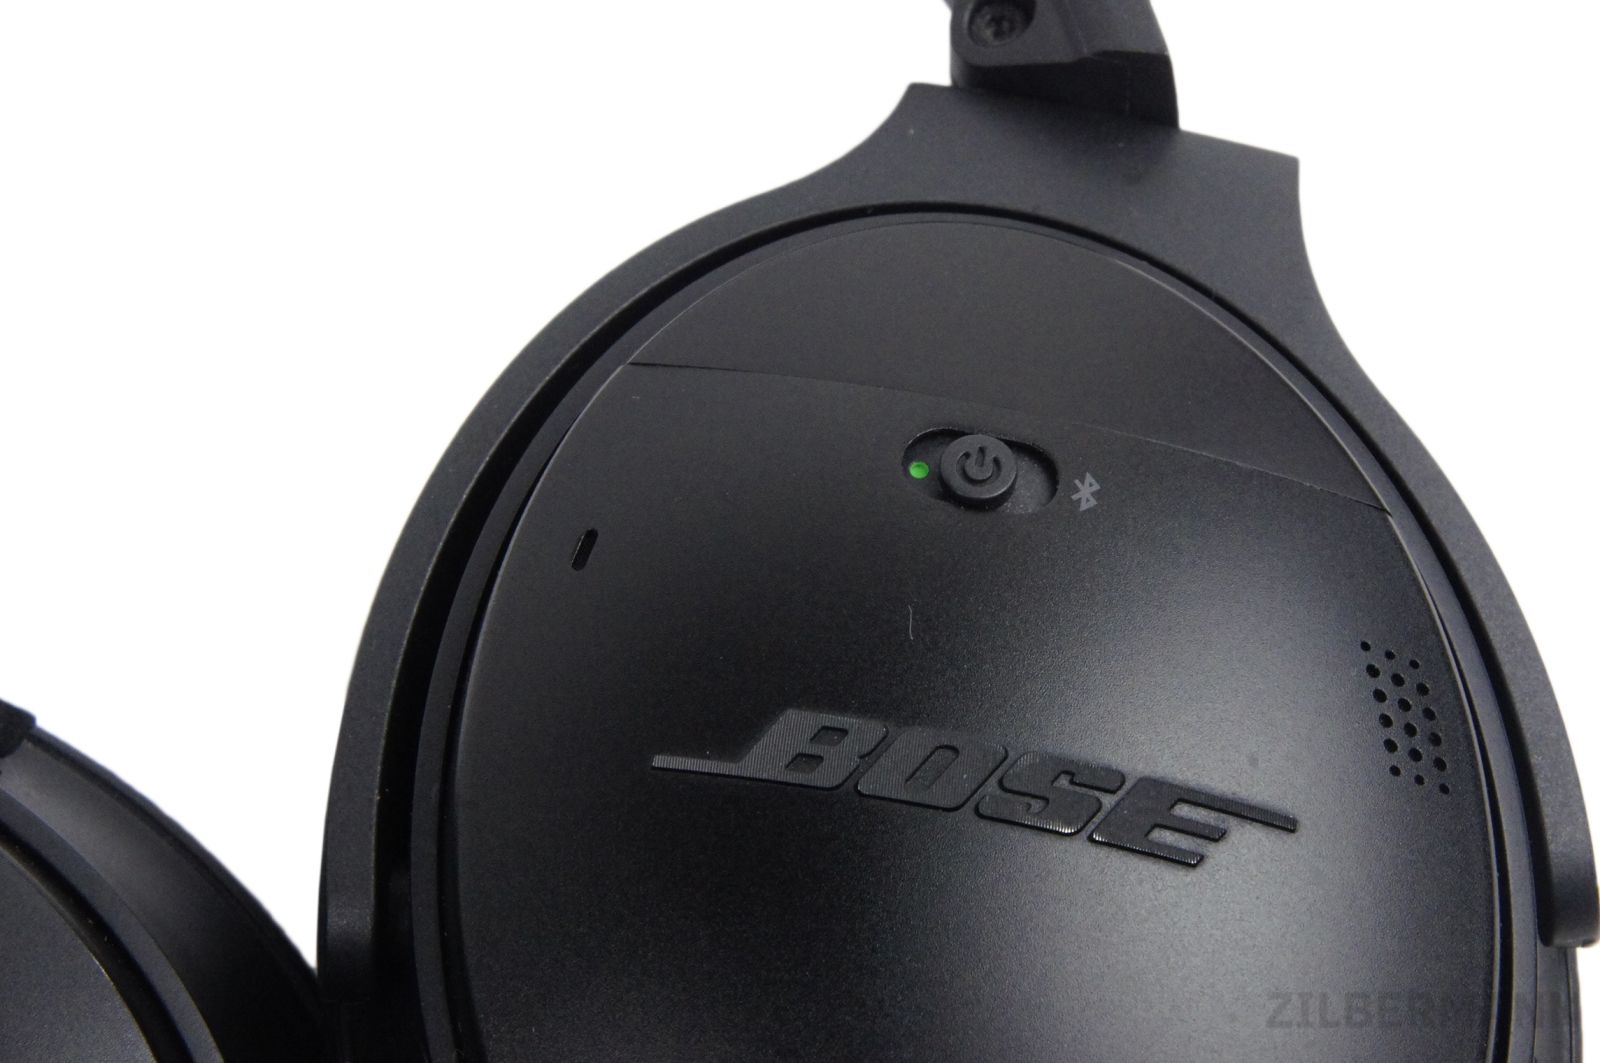 Bose Quiet Comfort 35 Kopfhörer gebraucht kaufen | azilb.de